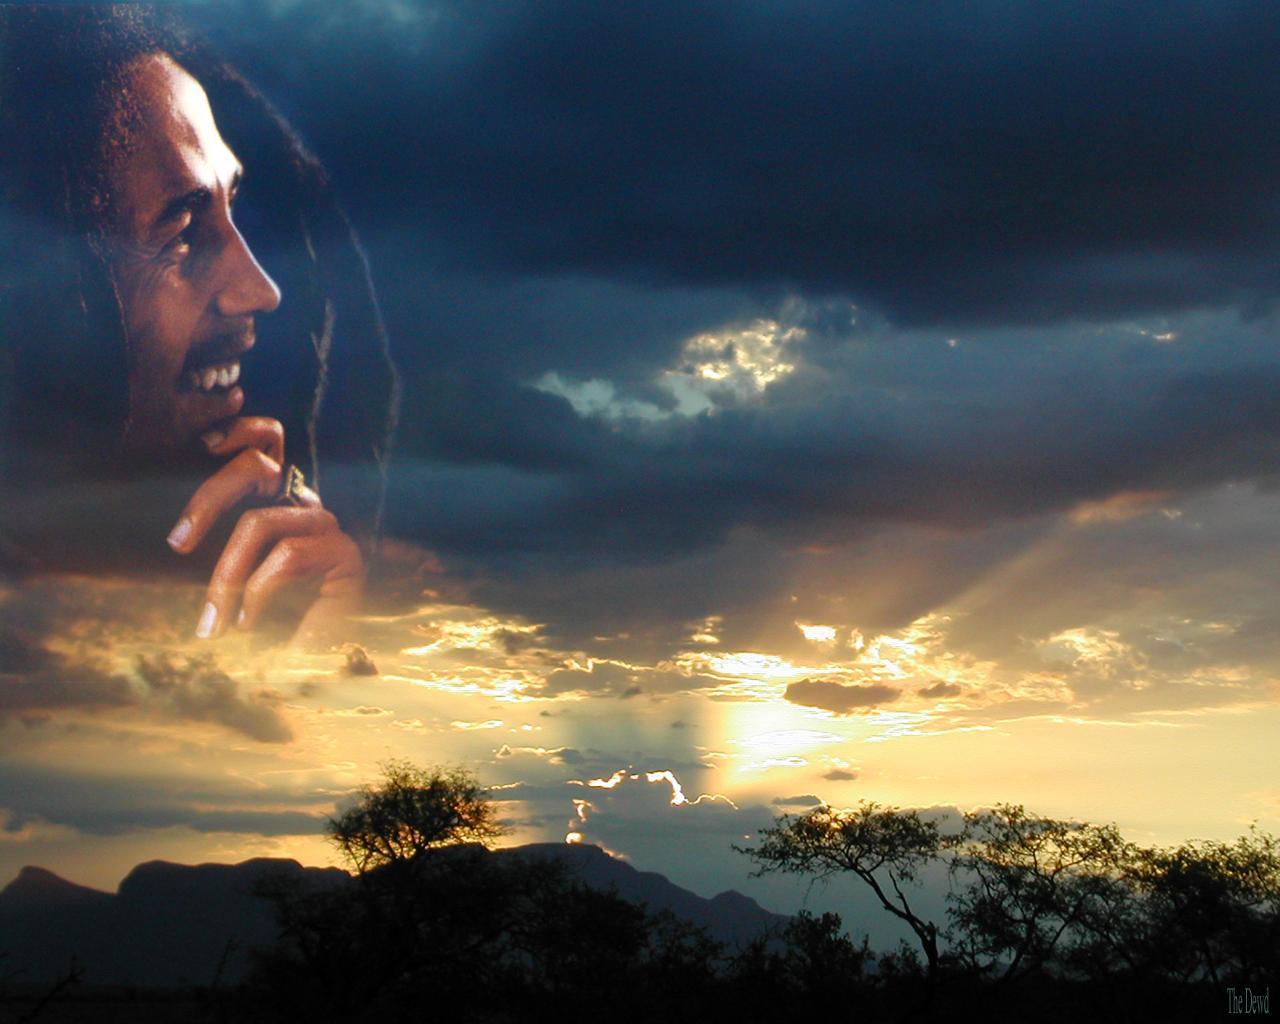 Download HQ Bob Marley wallpaper / Celebrities Male / 1280x1024